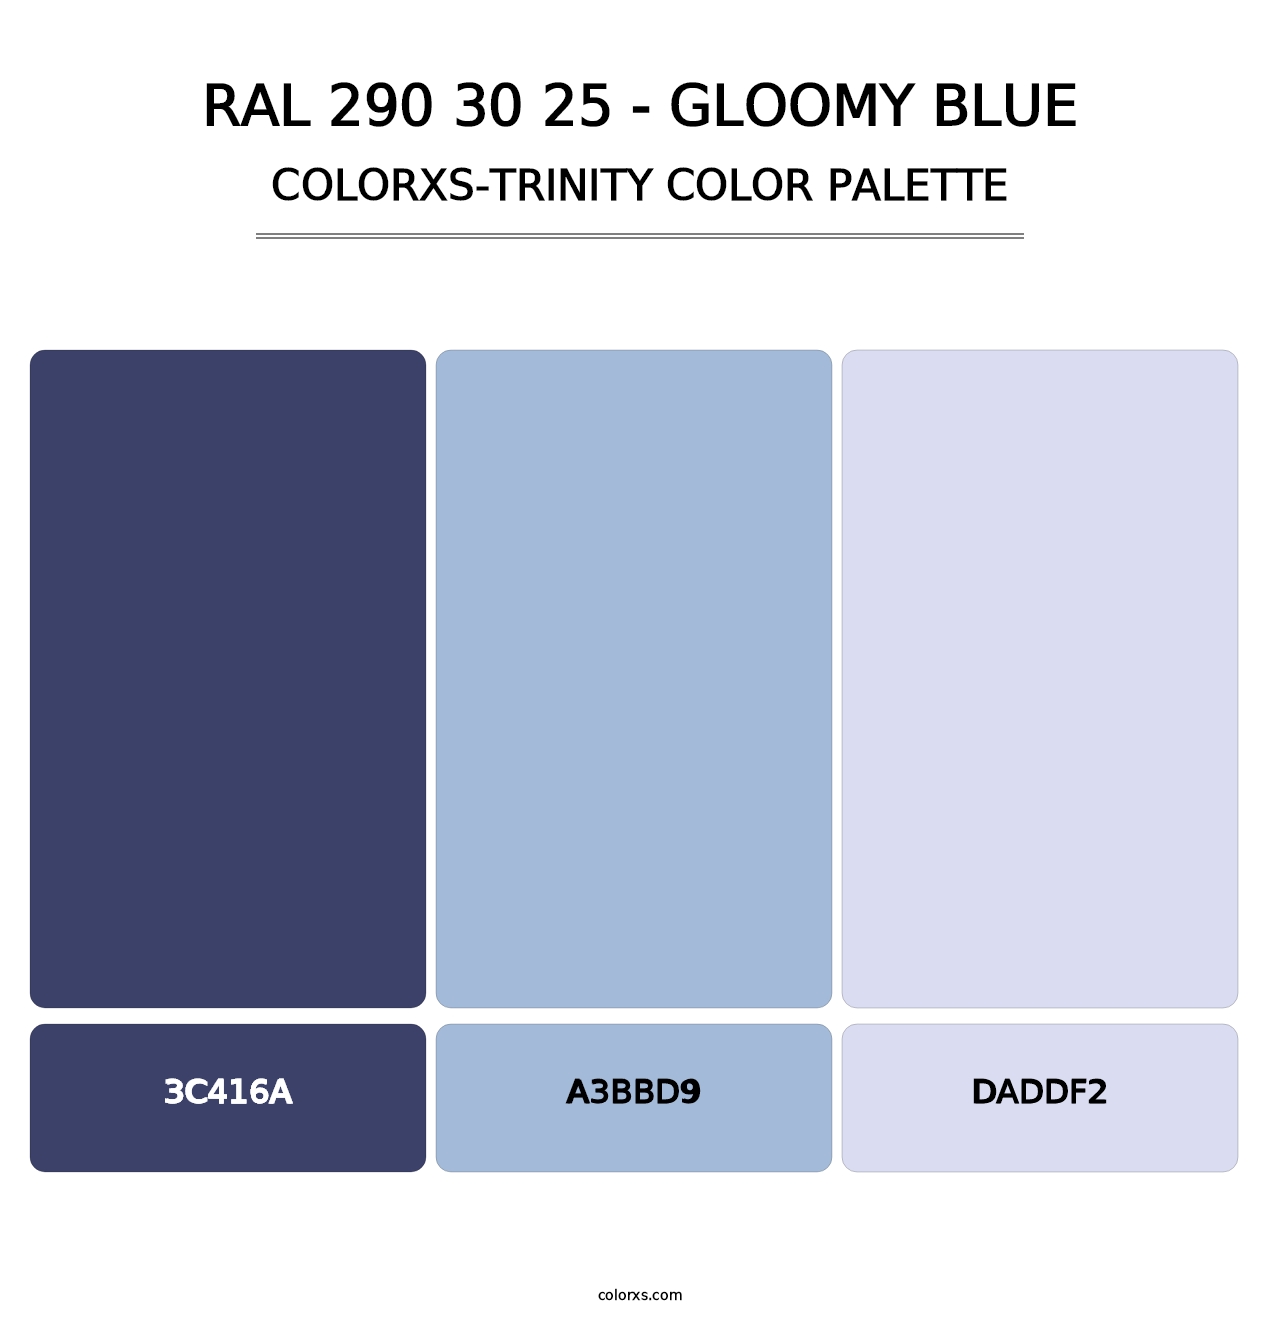 RAL 290 30 25 - Gloomy Blue - Colorxs Trinity Palette